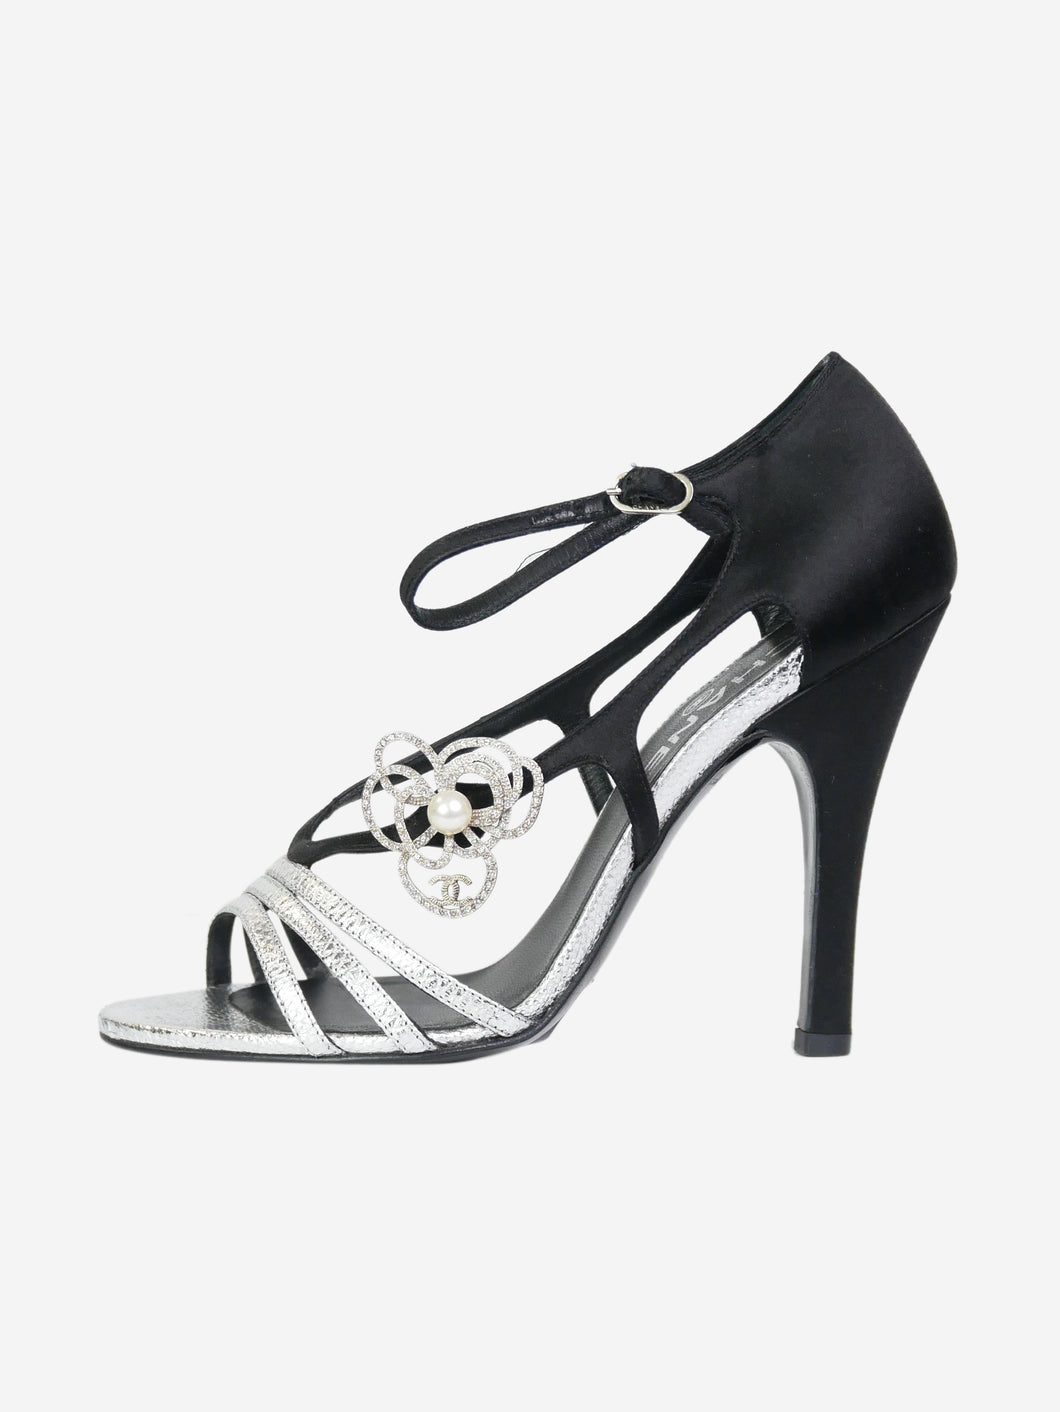 Chanel pre-owned black satin sandal heels with floral embellishment